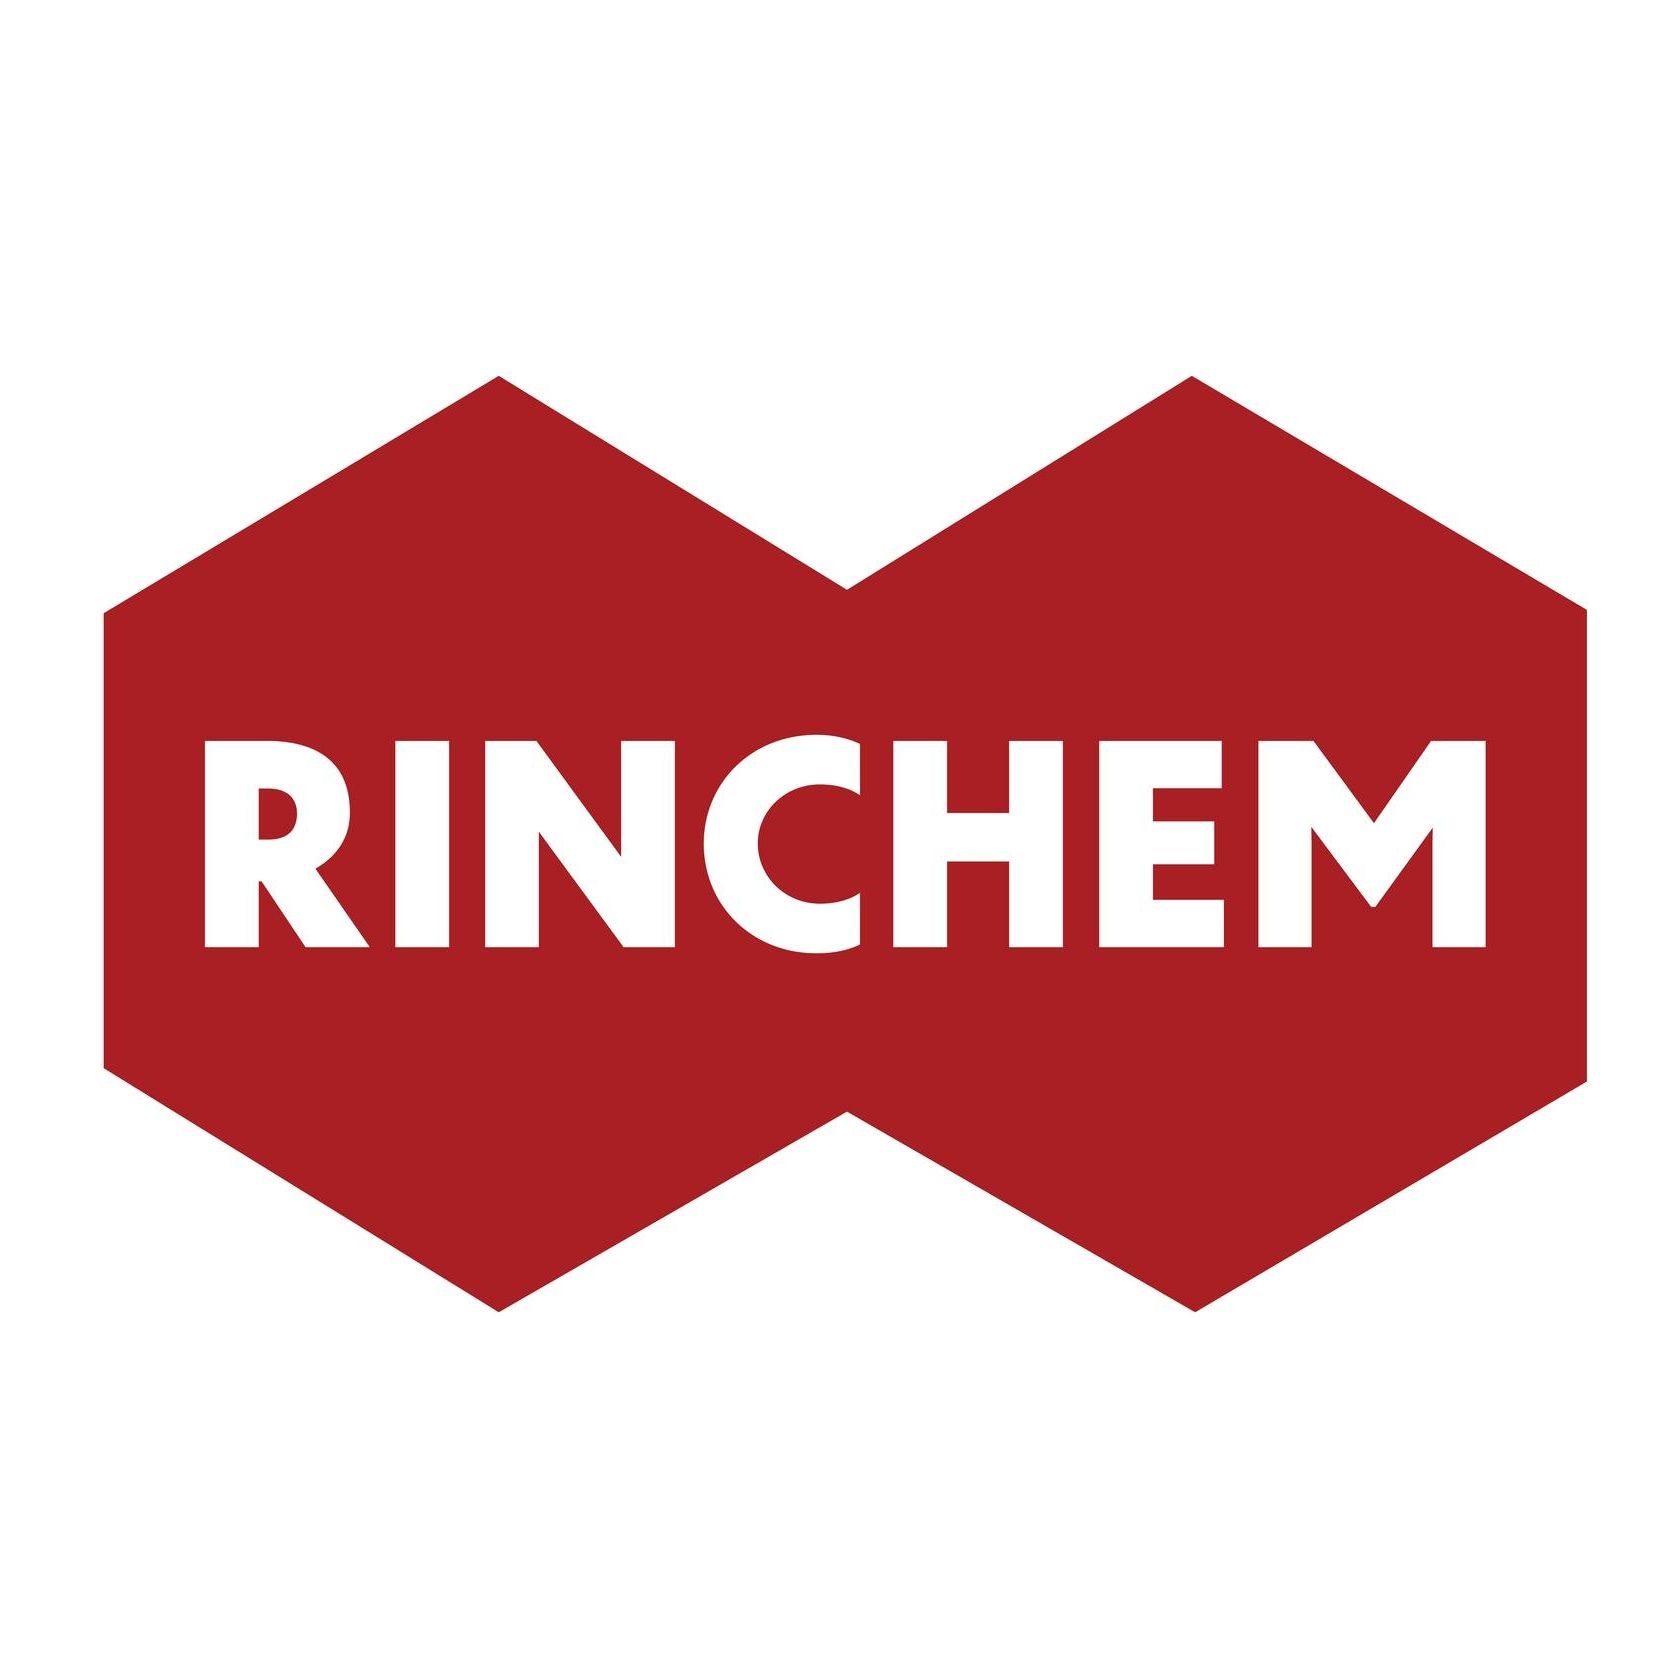 Rinchem Company